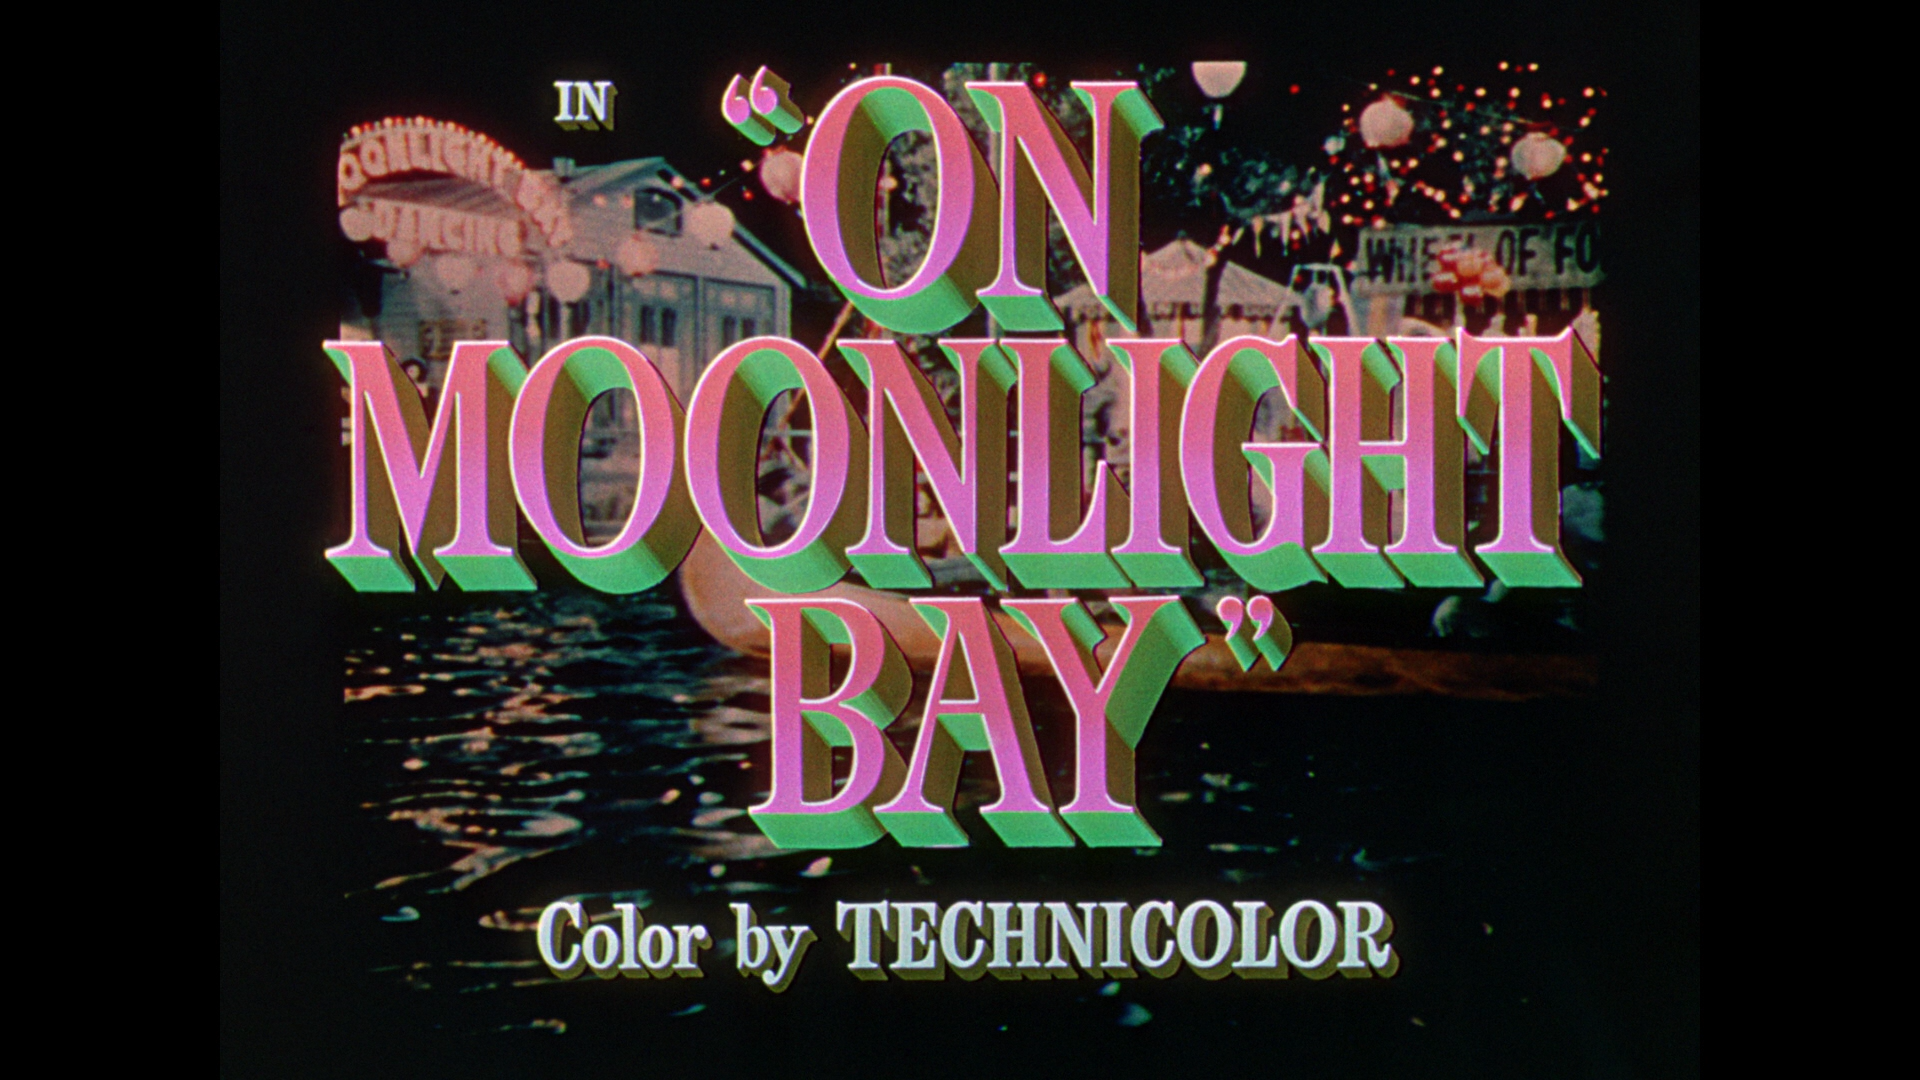 on moonlight bay title